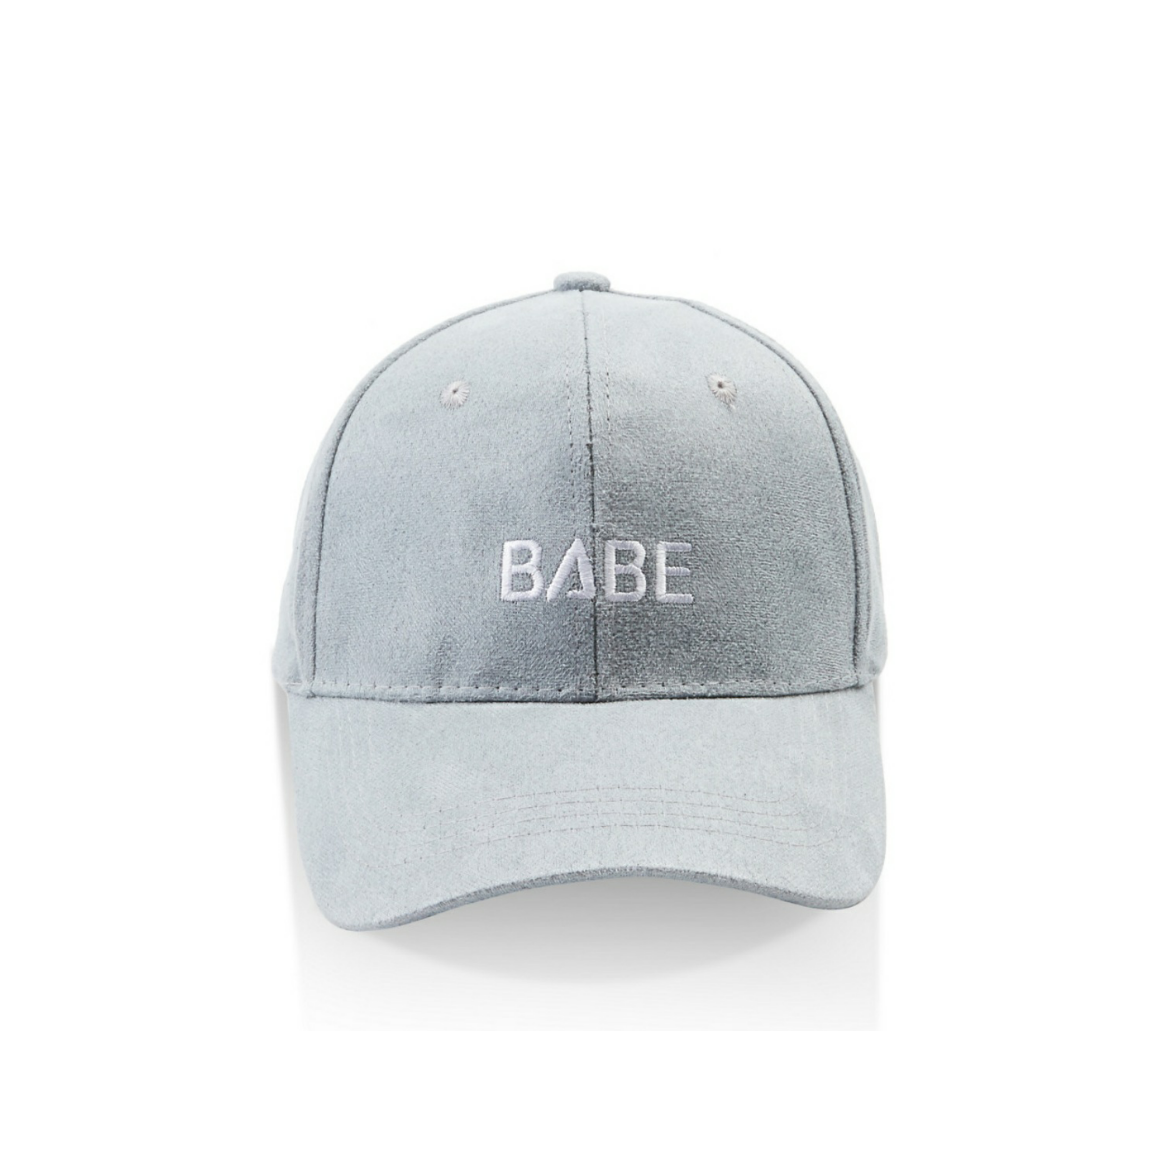 Babe Cap (2 Options)